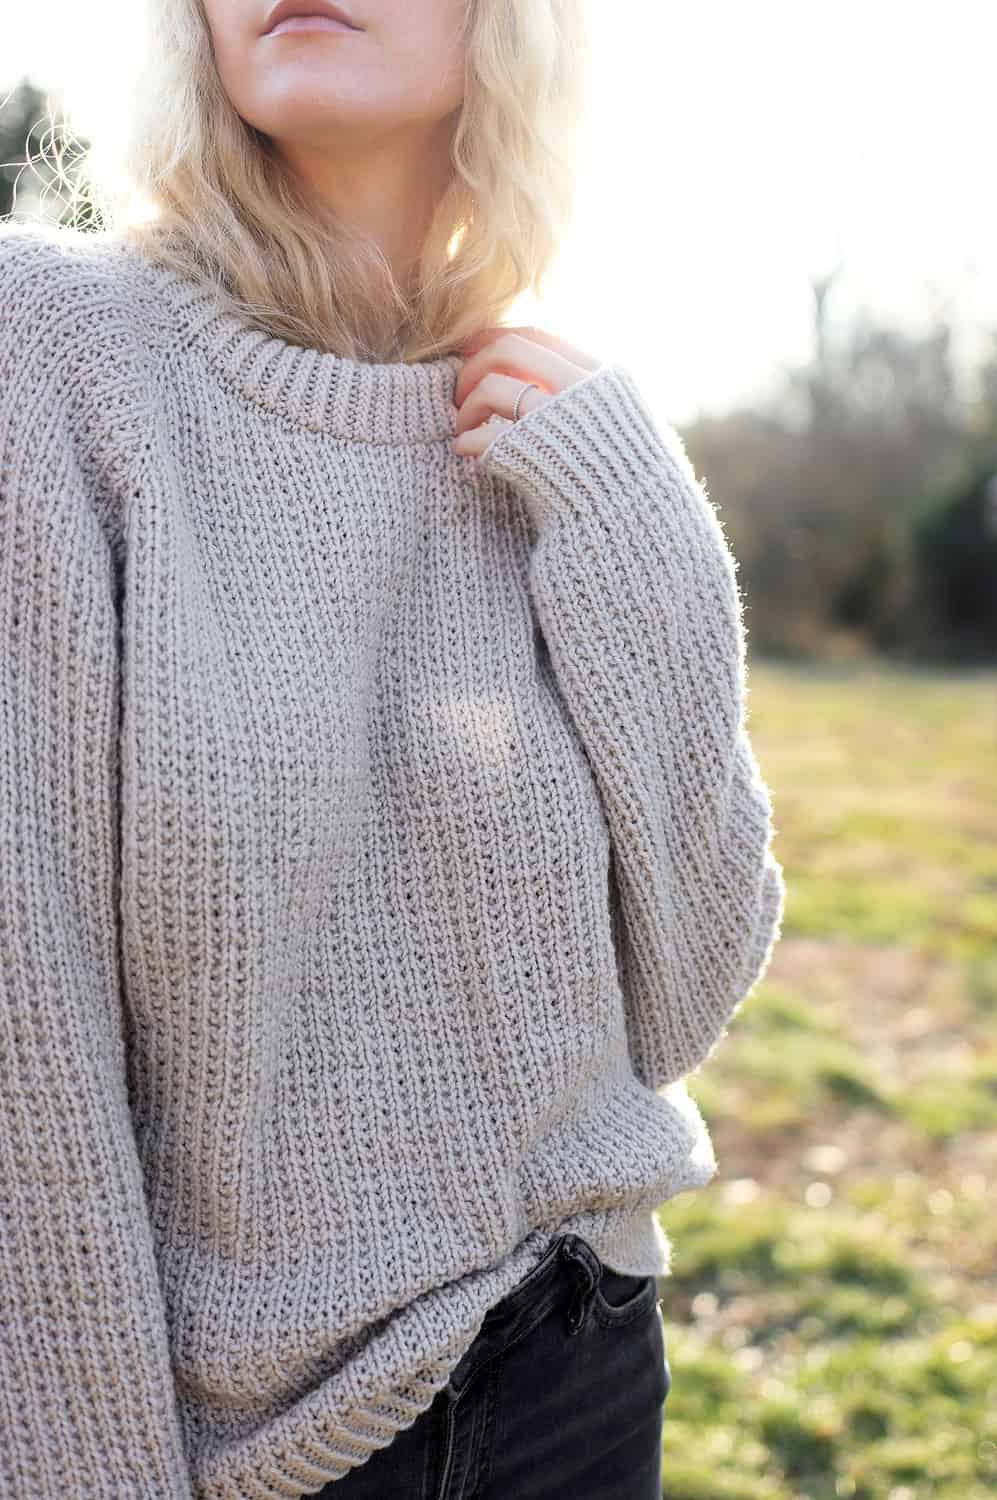 Cozy Sweater Knitting Pattern, Raglan Top Down Sweater Darling Jadore